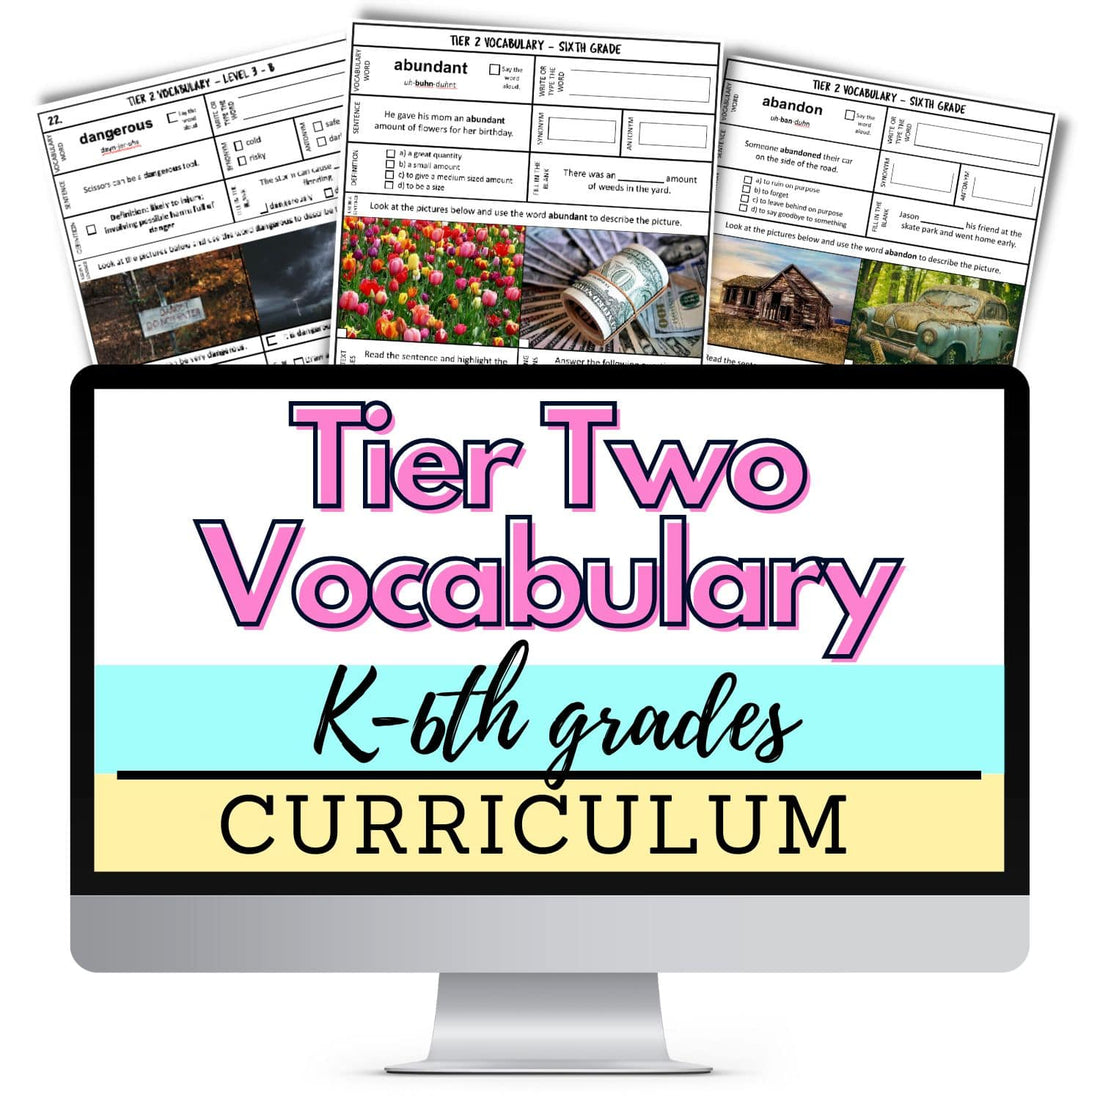 tier 2 vocabulary curriculum